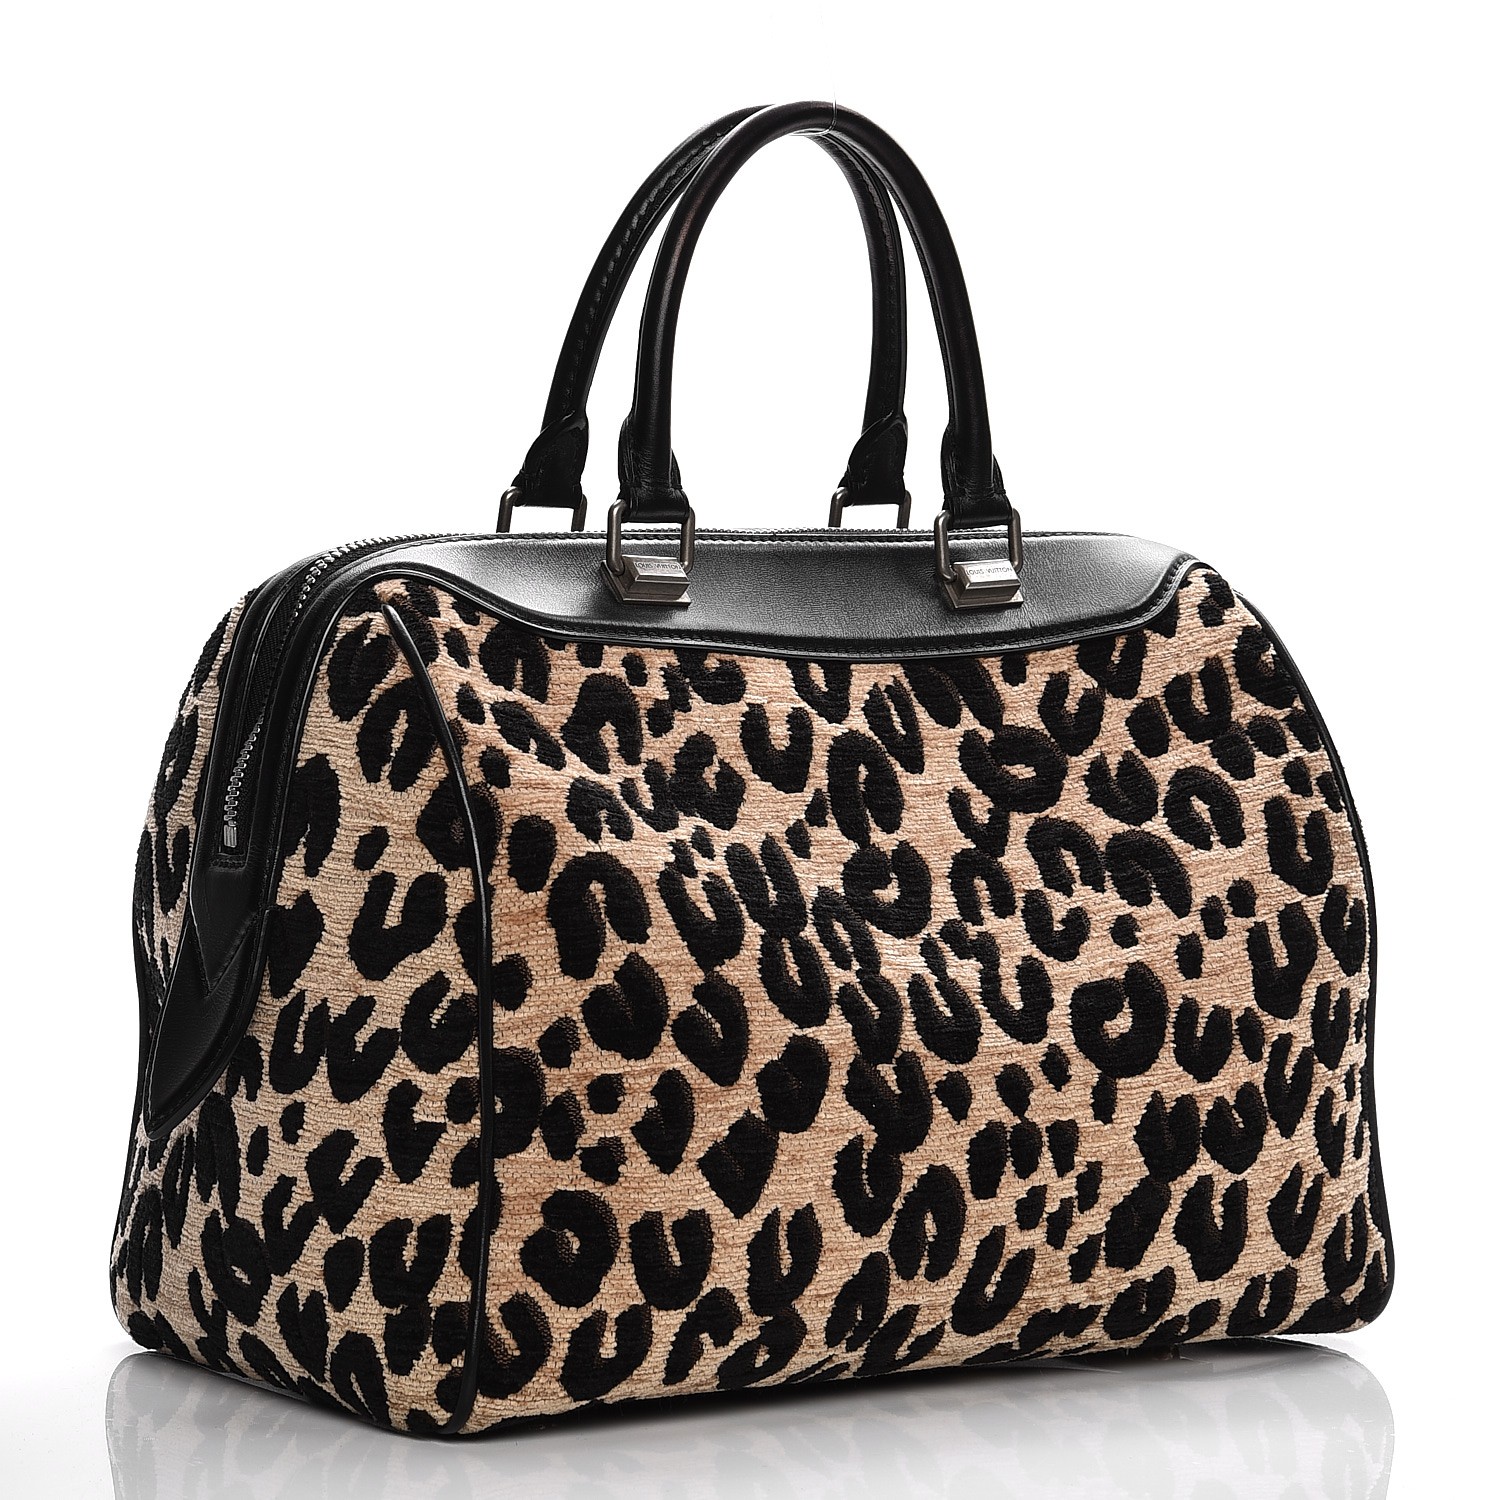 Louis Vuitton Black And Leopard Print Bag - 3 For Sale on 1stDibs  louis  vuitton cheetah bag, black louis vuitton bag with cheetah print, leopard  print louis vuitton bag